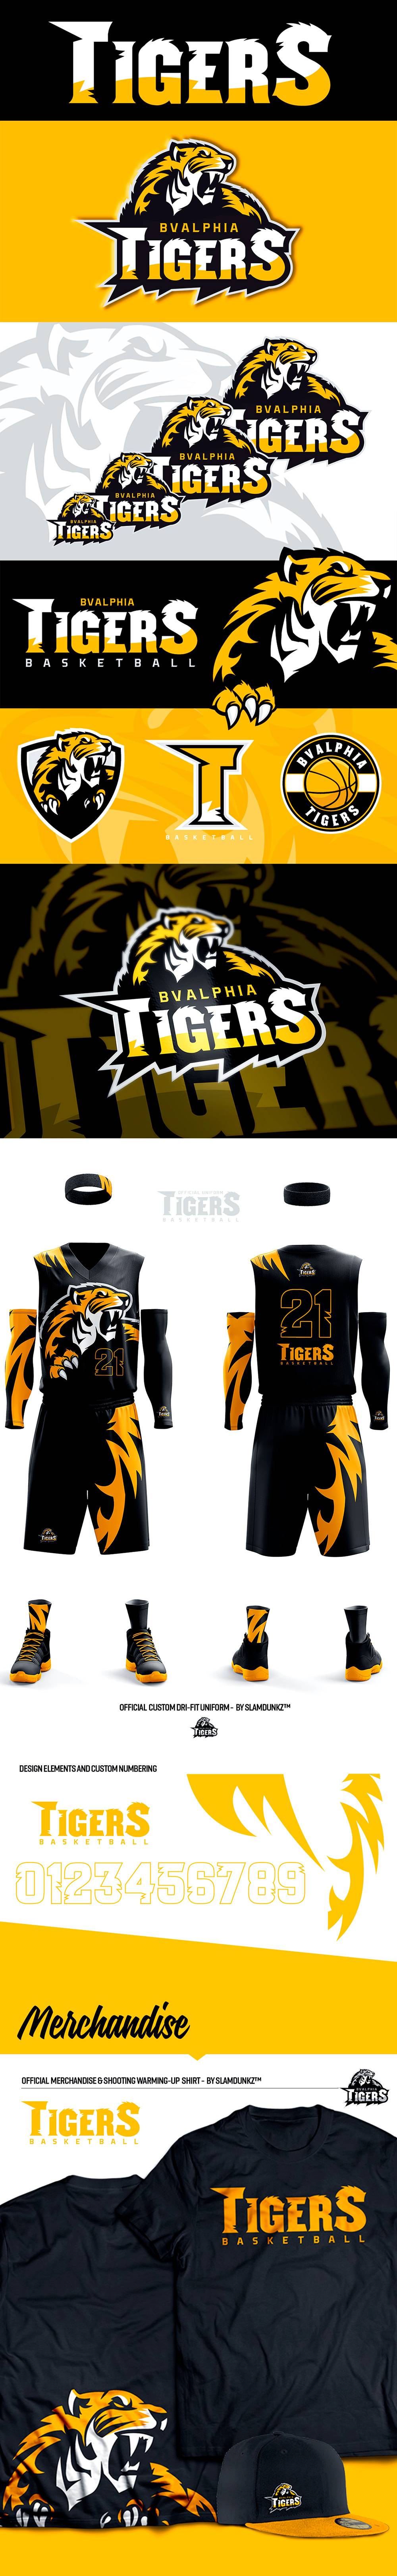 Tiger Basketball Logo - Awesome Basketball Team Logo and Identity Designs